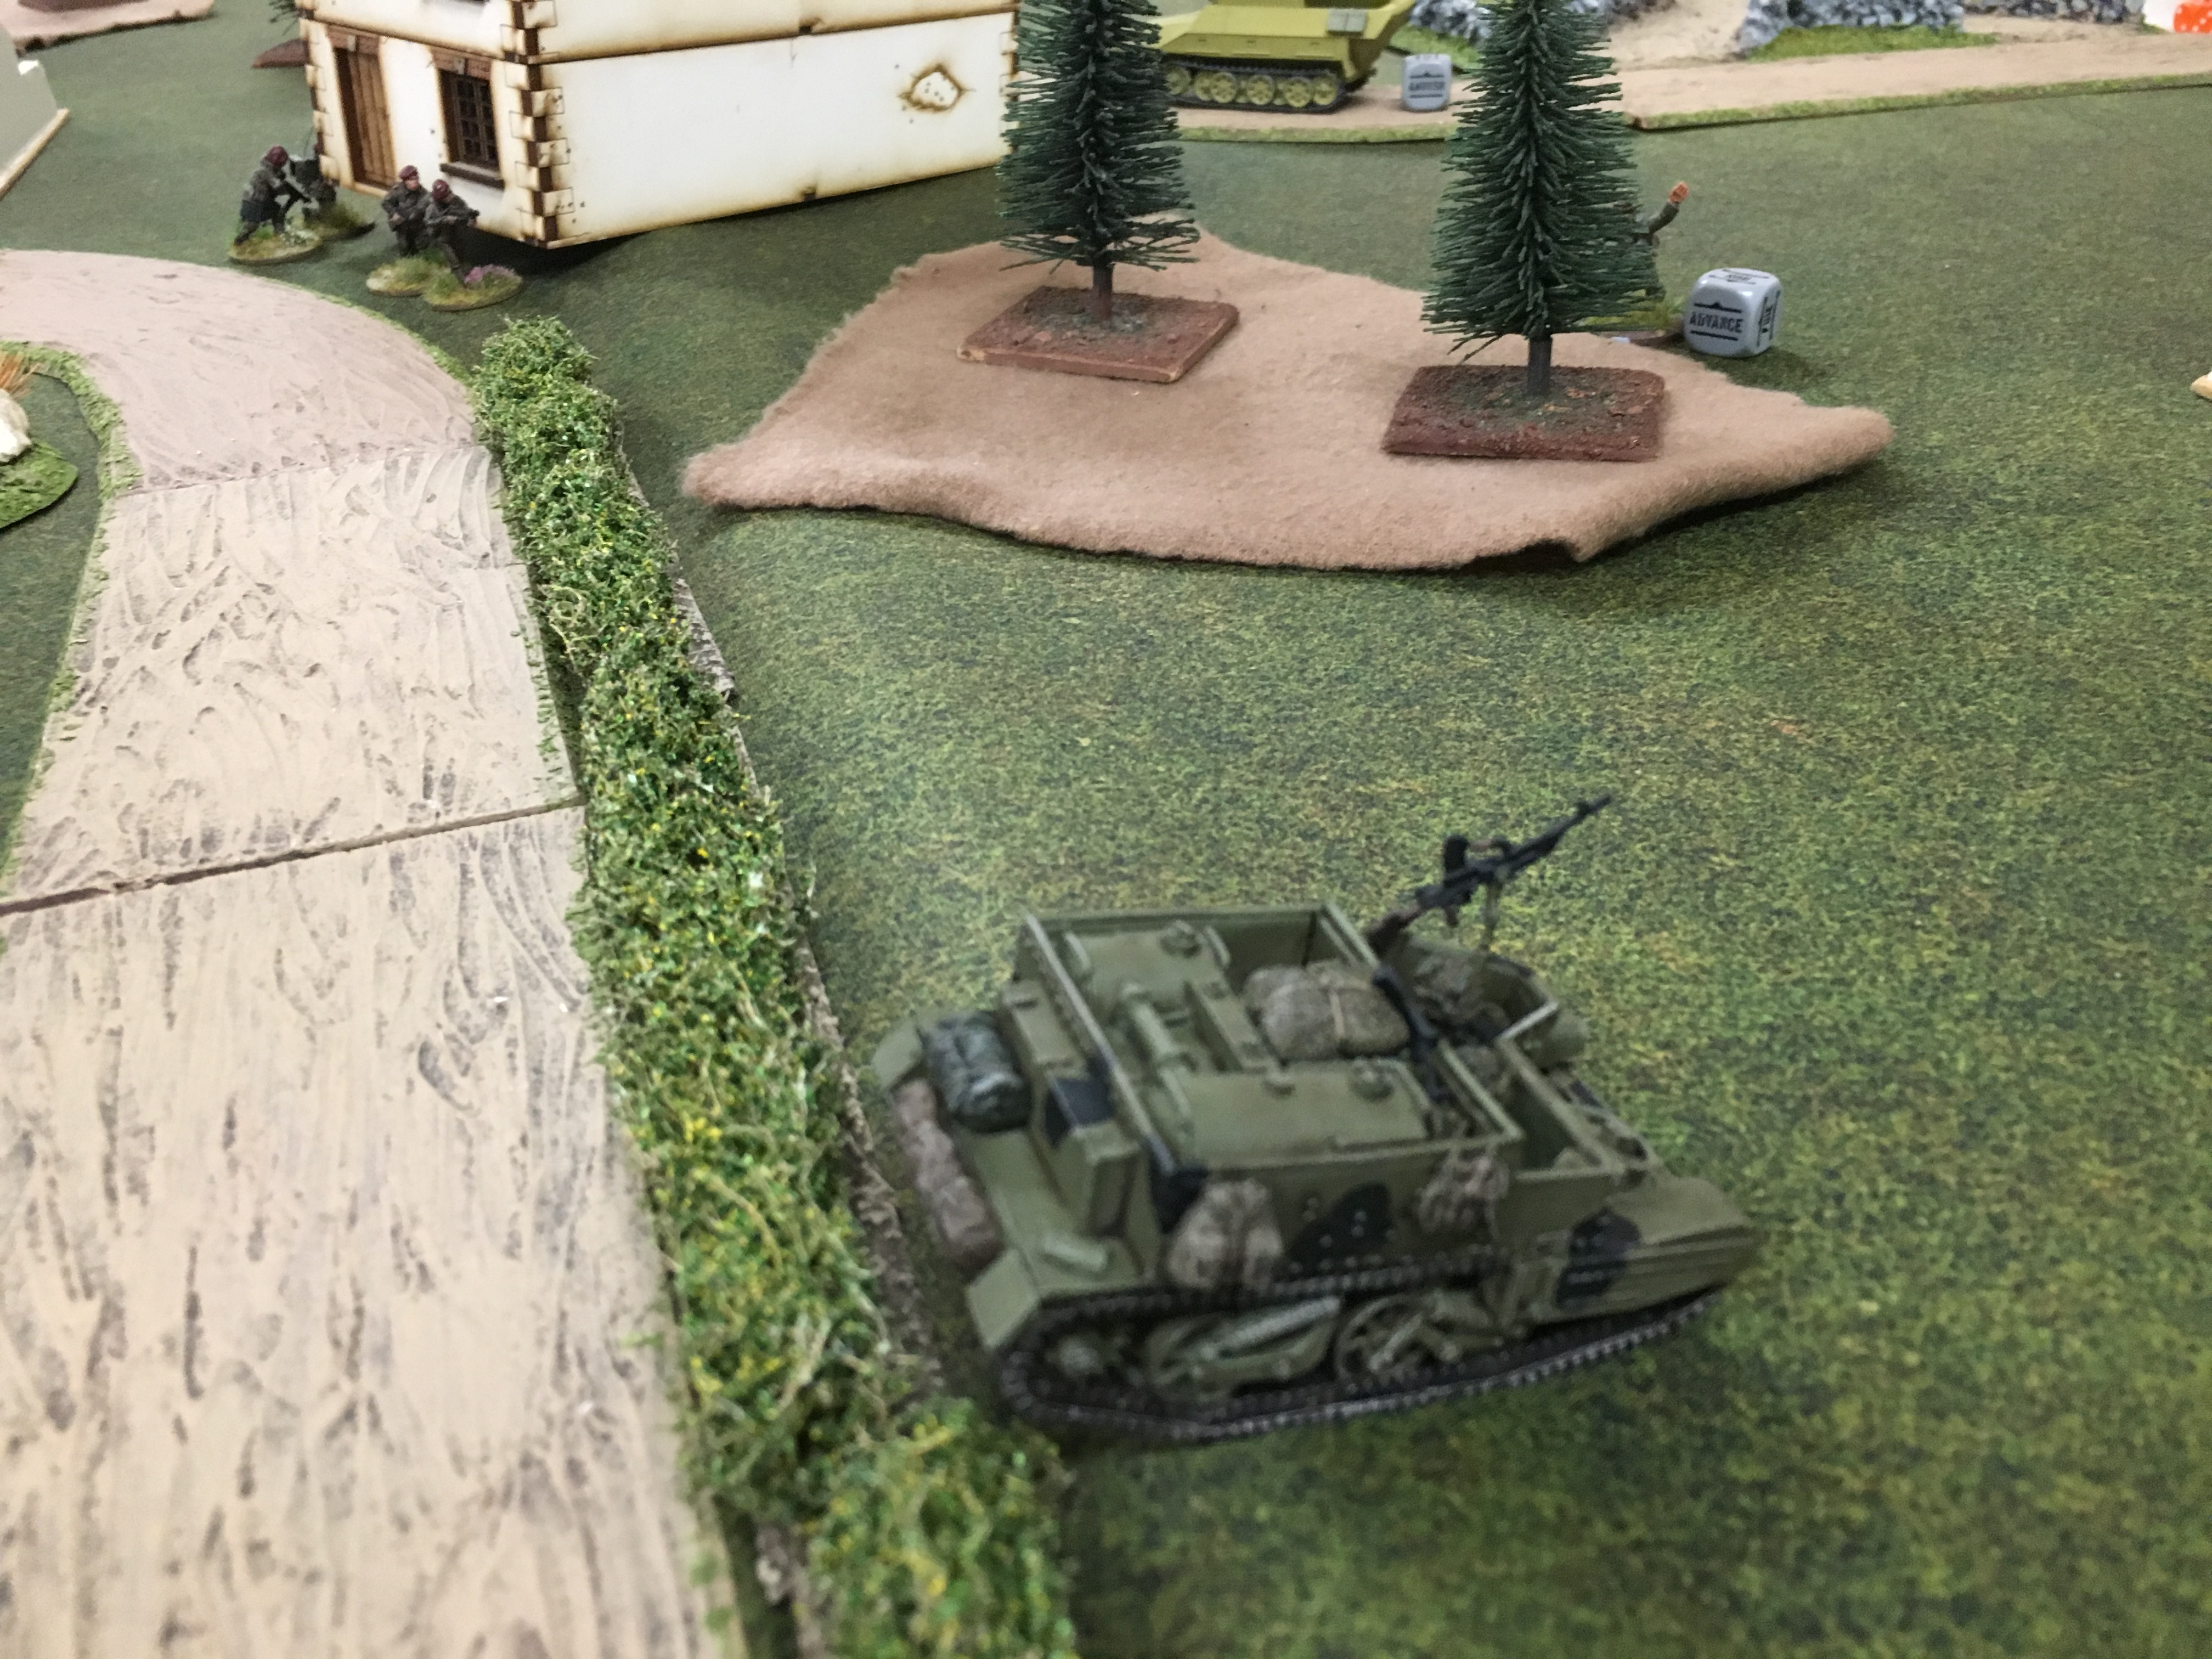 German grenadier’s versus Nellyforce in a fierce infantry engagement